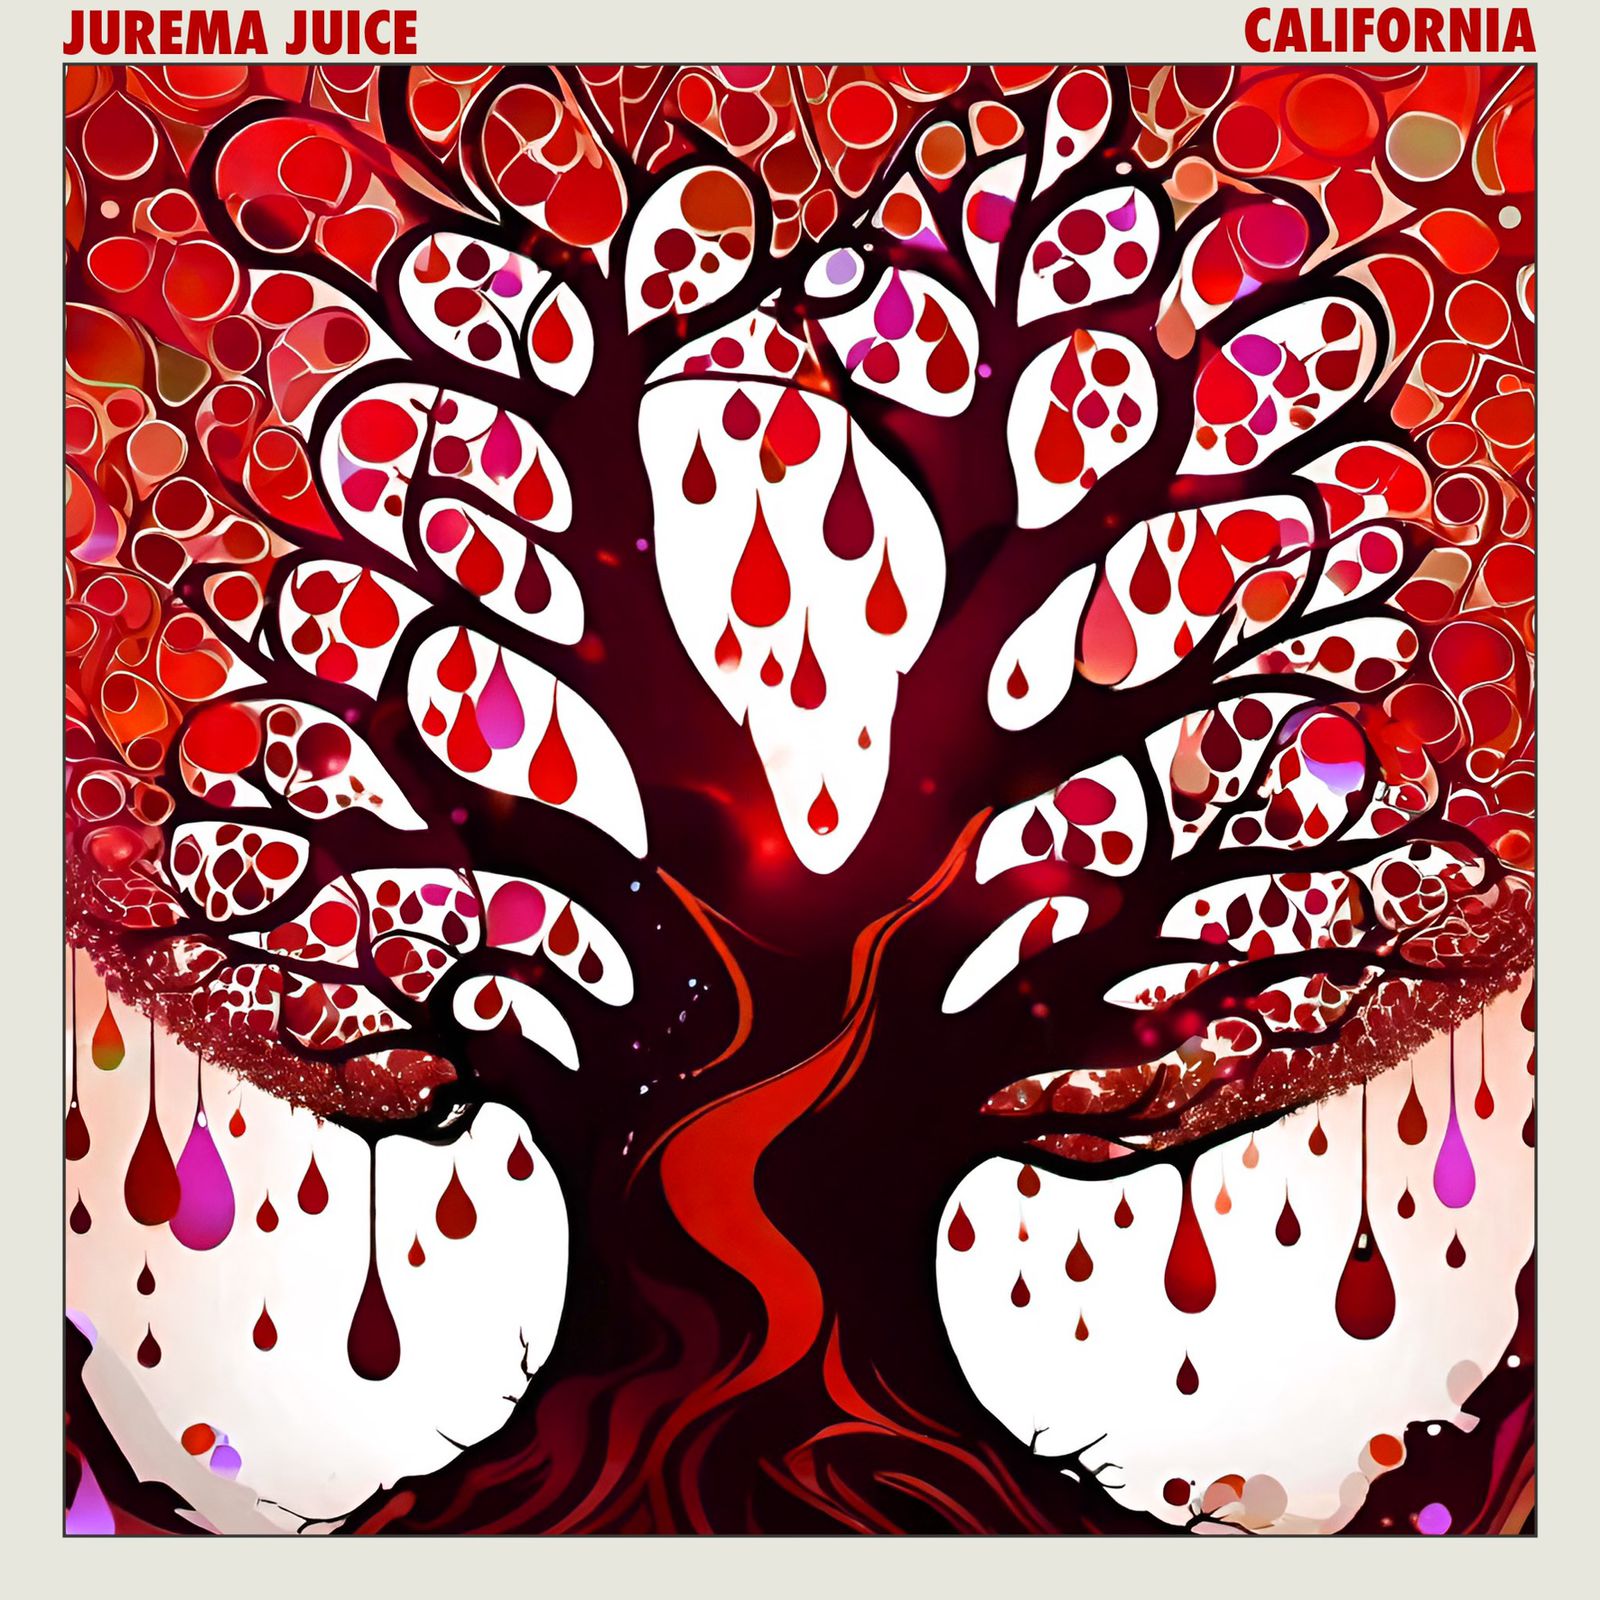 Jurema Juice aposta no rock experimental em seu segundo single, California (My Girl)